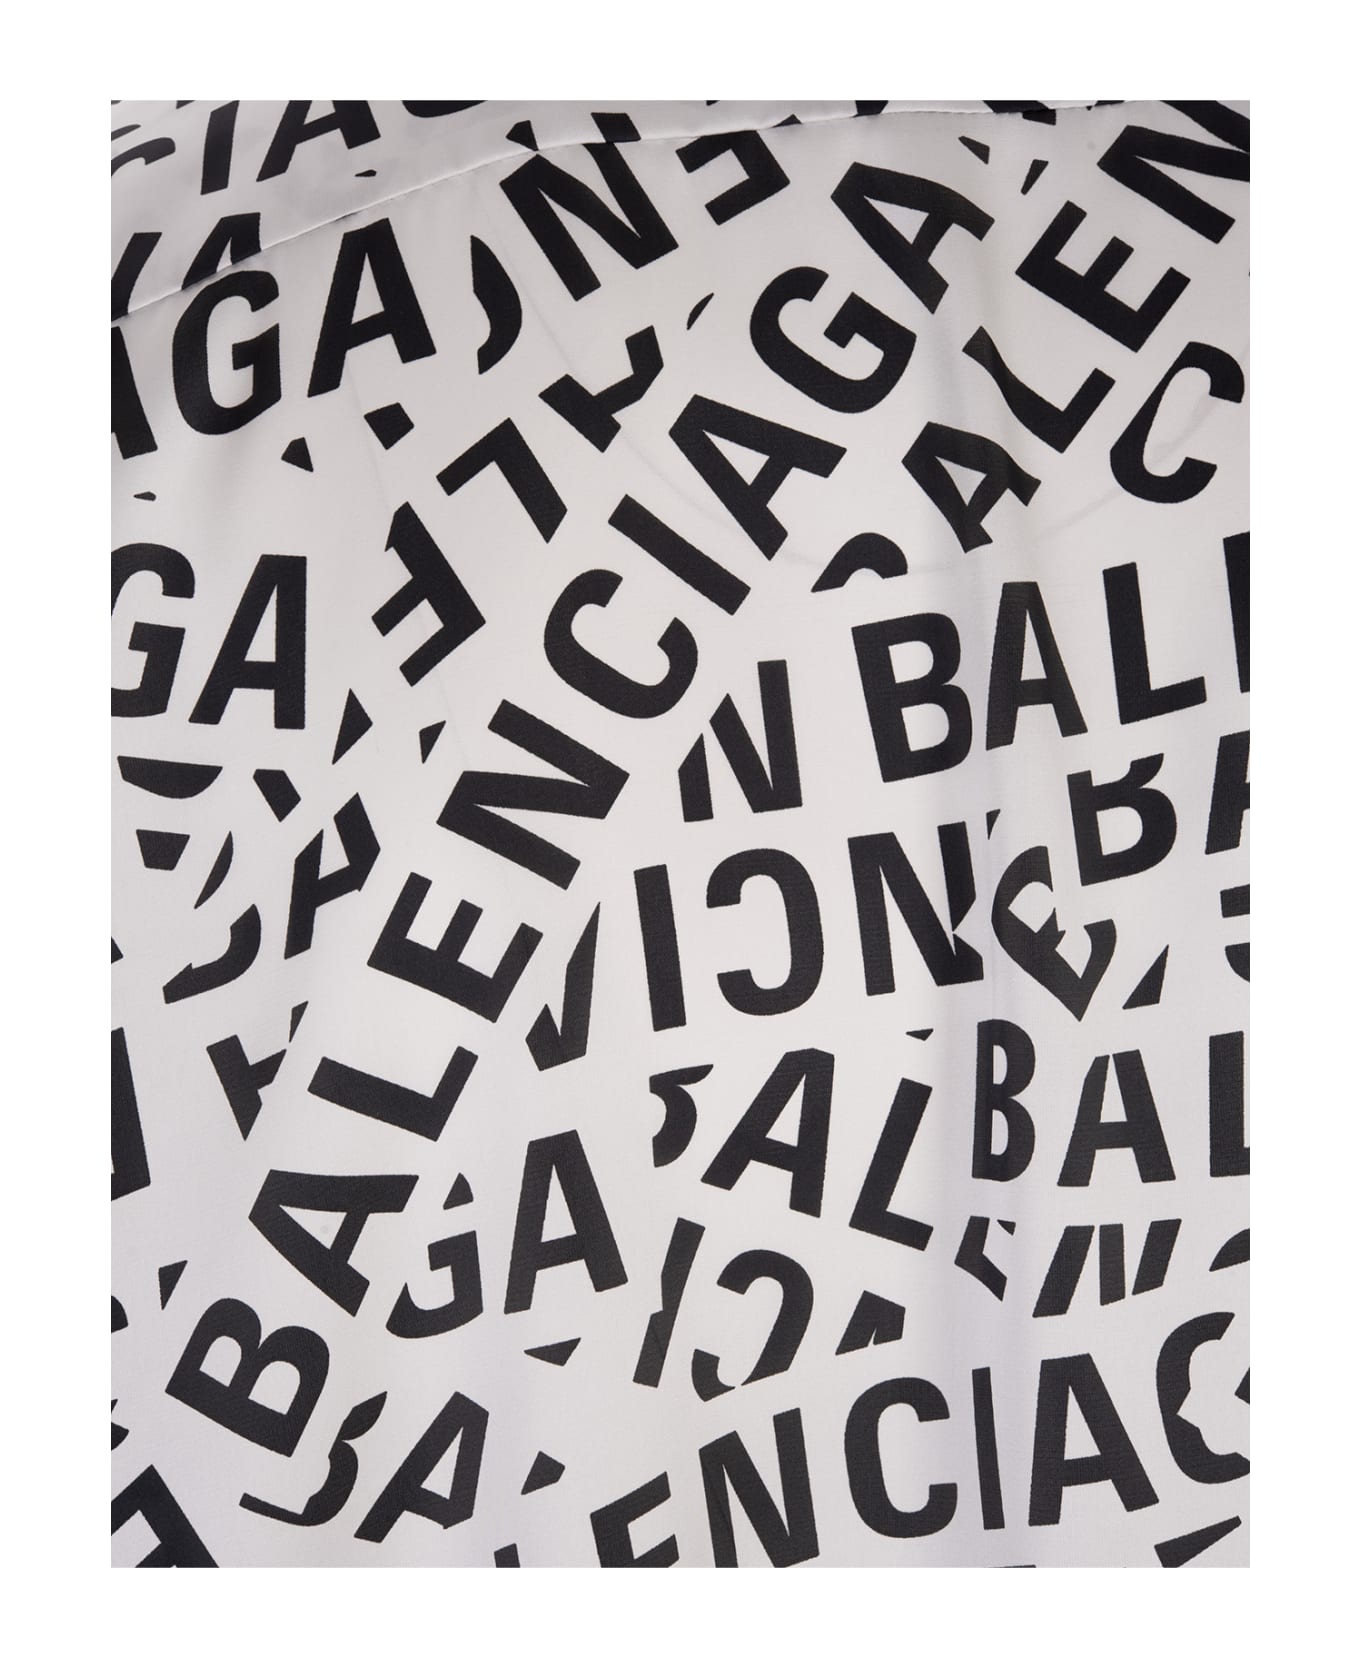 Balenciaga Man Logo Strips Large Fit Shirt In White And Black - Bianco/nero